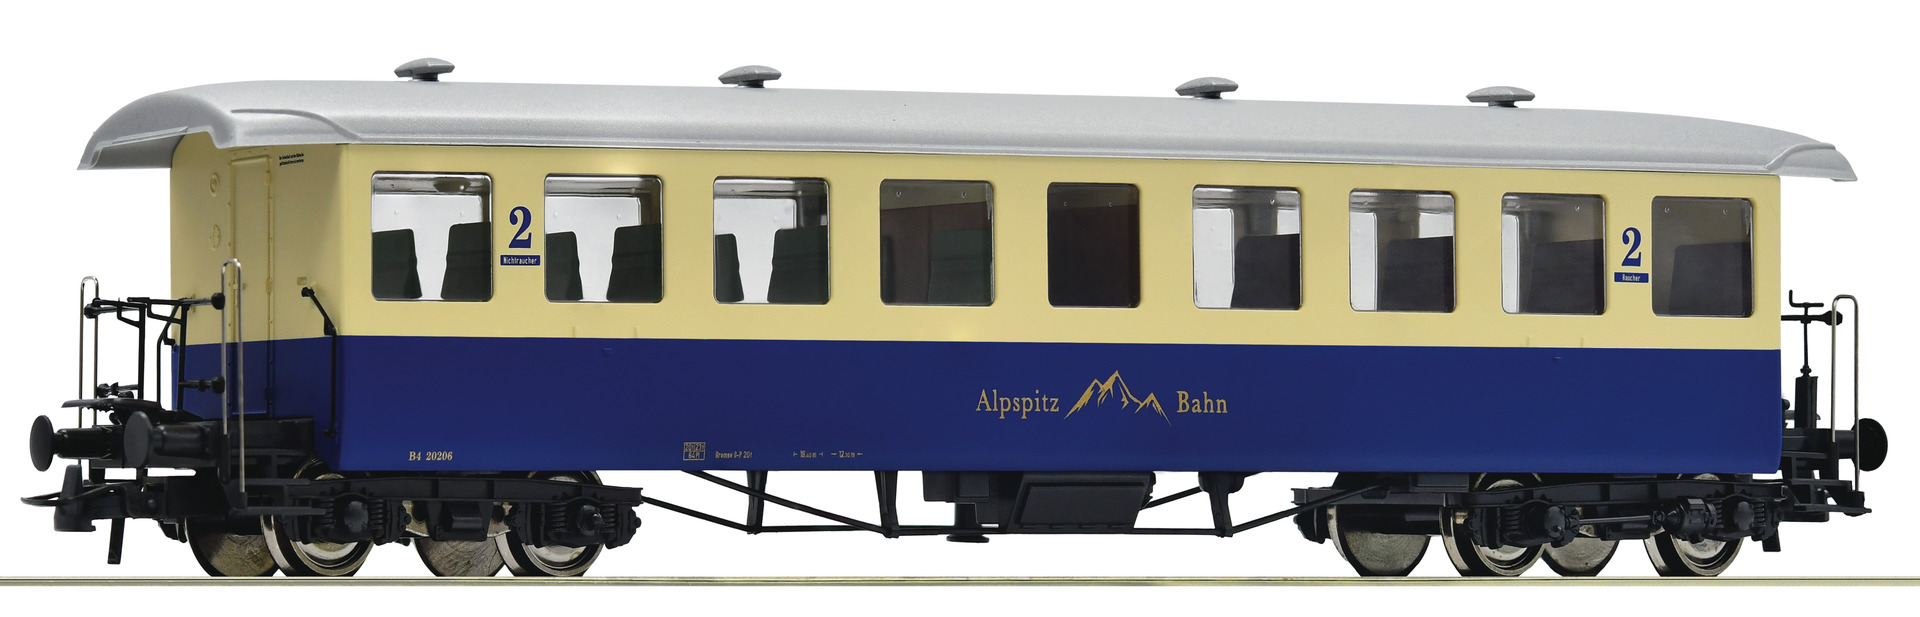 roco-74507-Zahnradbahn-Personenwagen-B4-20206-Alpspitz-Bahn-Epoche-III-IV